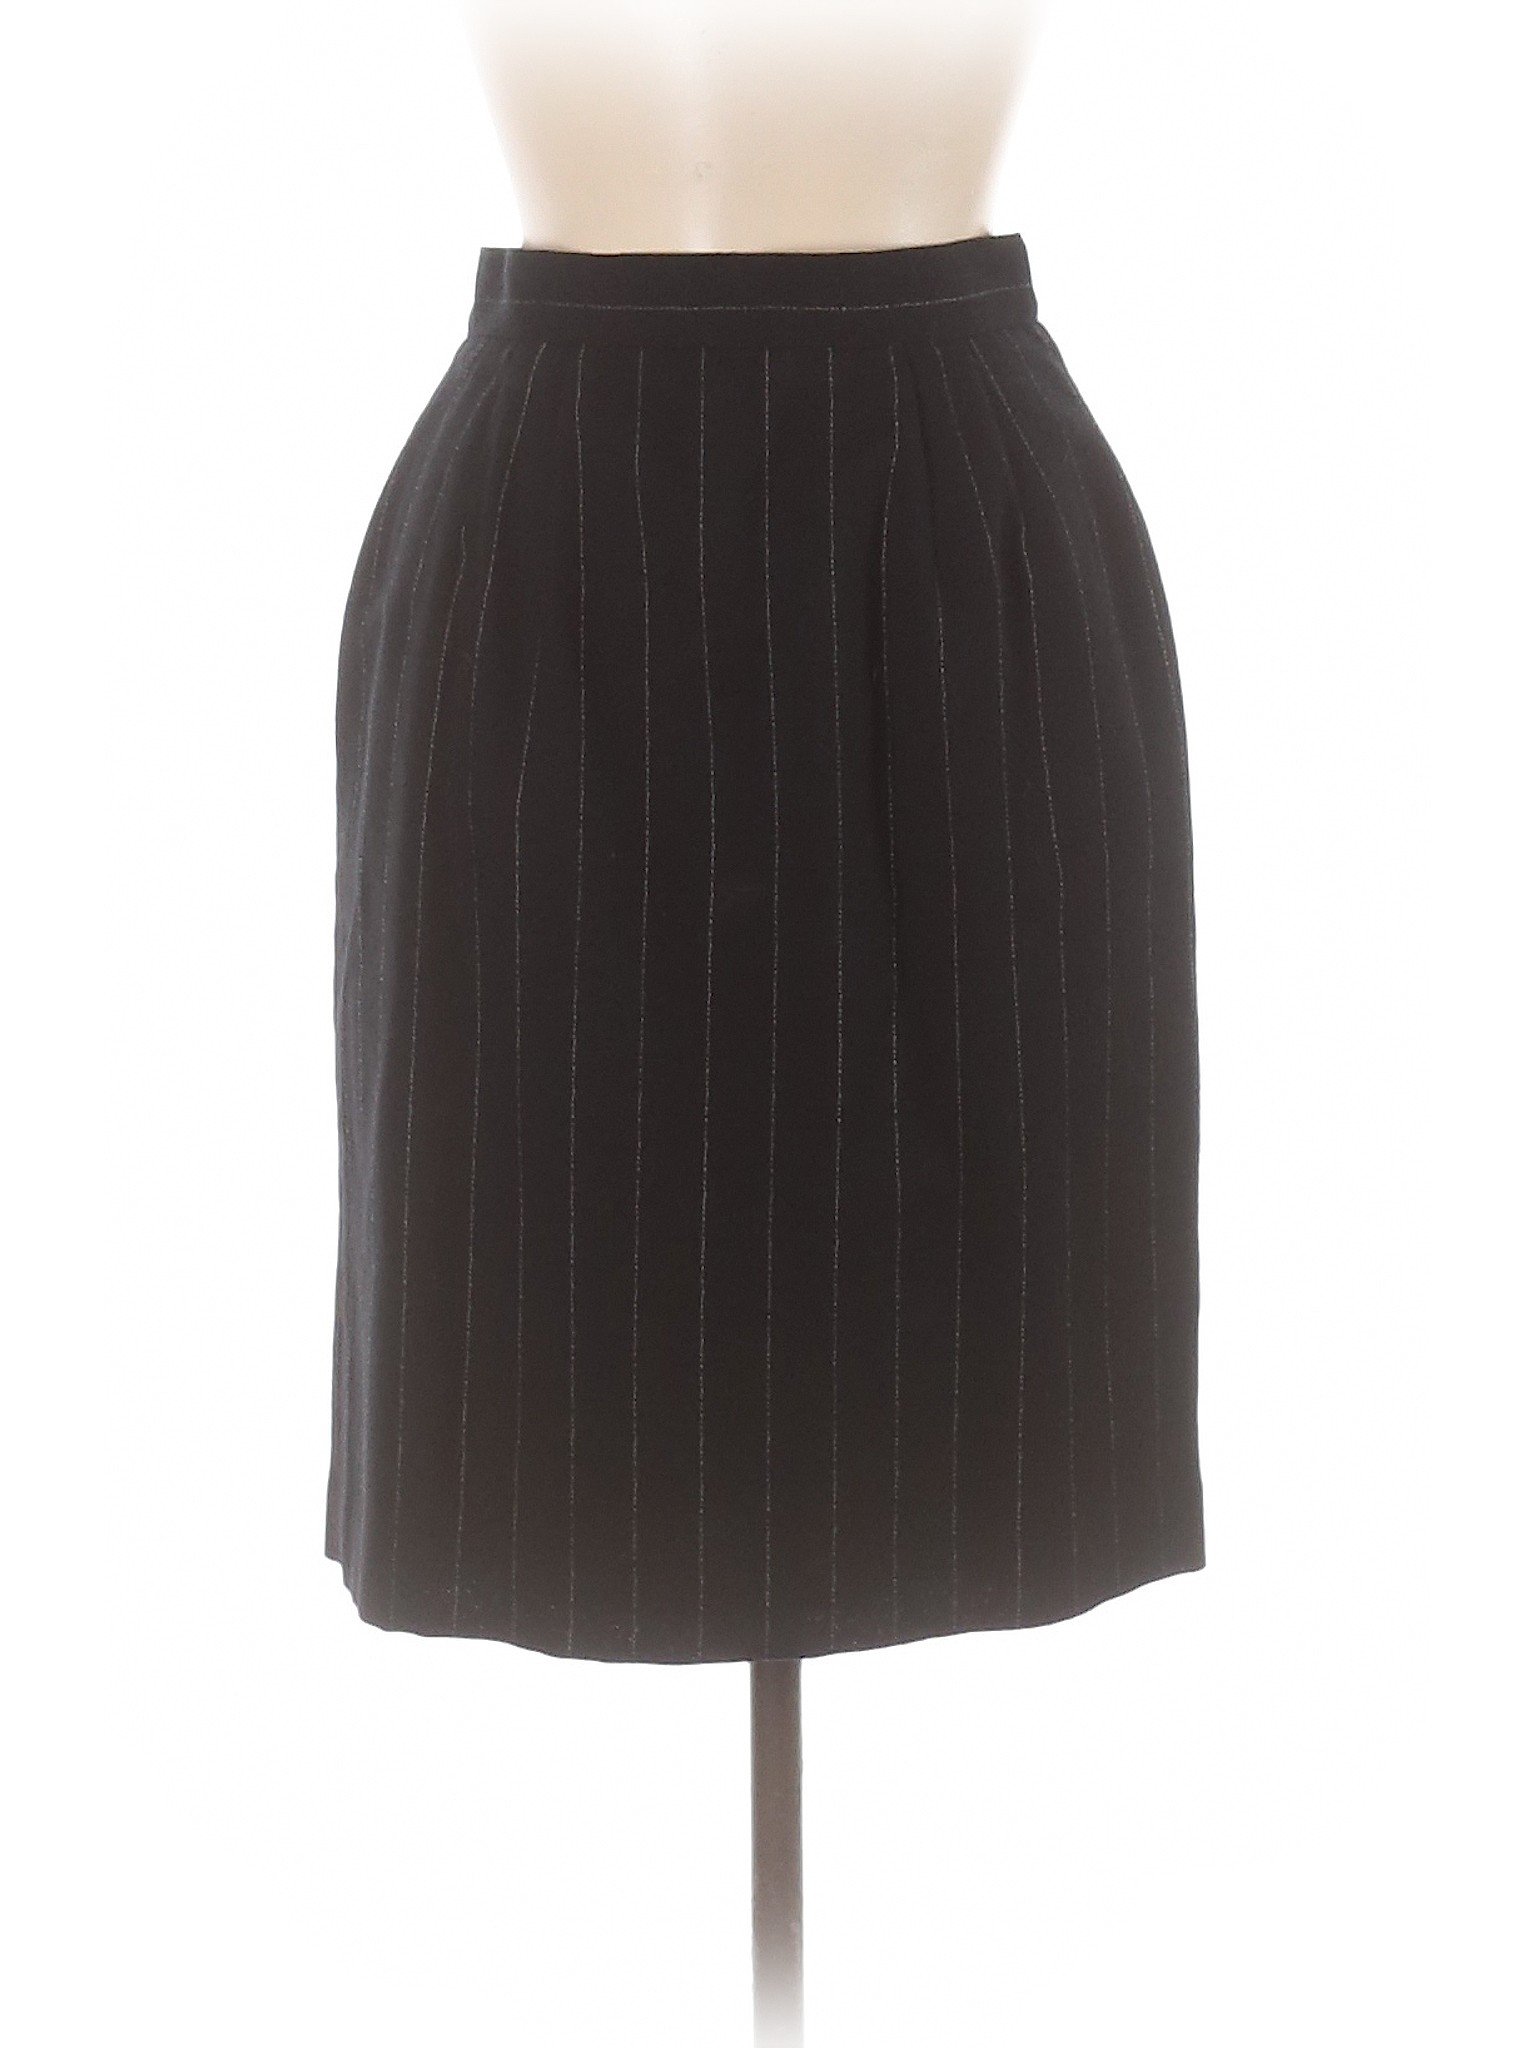 Lord & Taylor Women Black Wool Skirt 6 Petites | eBay